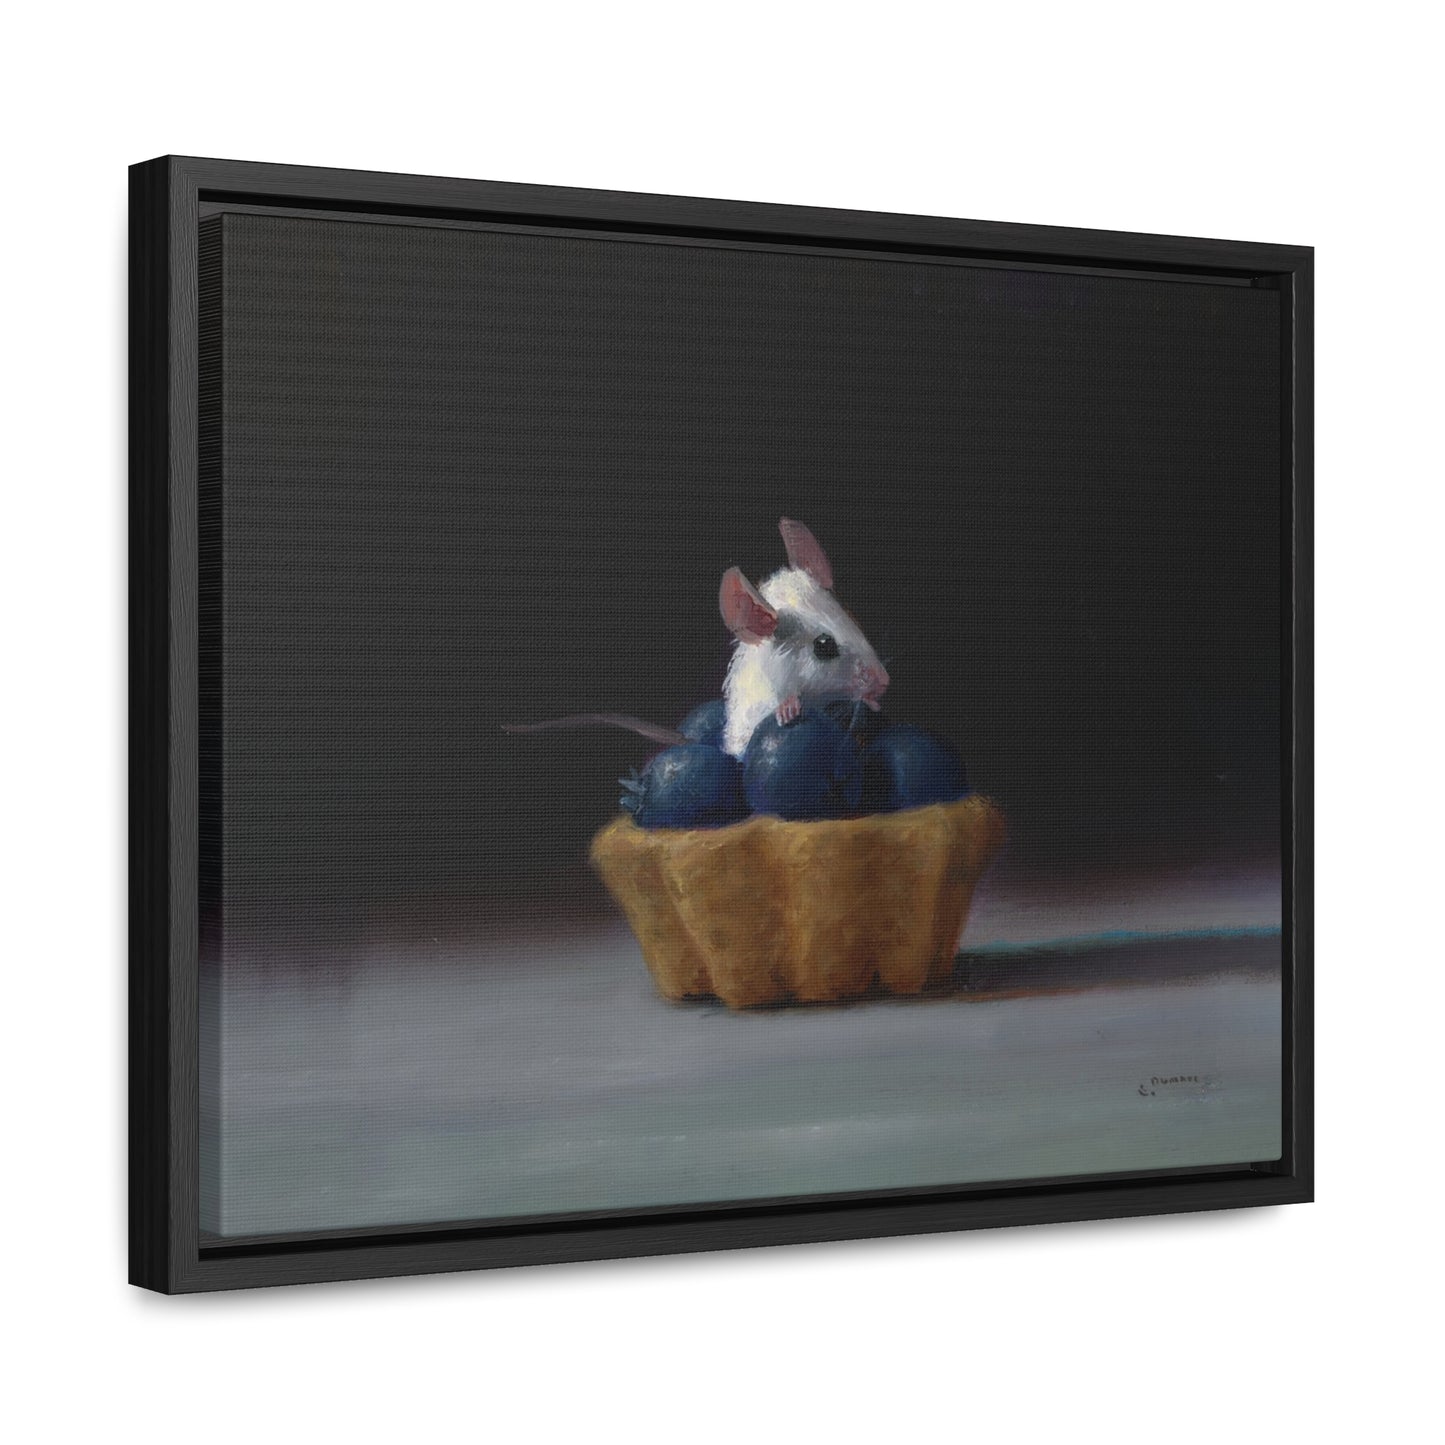 Stuart Dunkel: "Tart Party" - Framed Canvas Reproduction